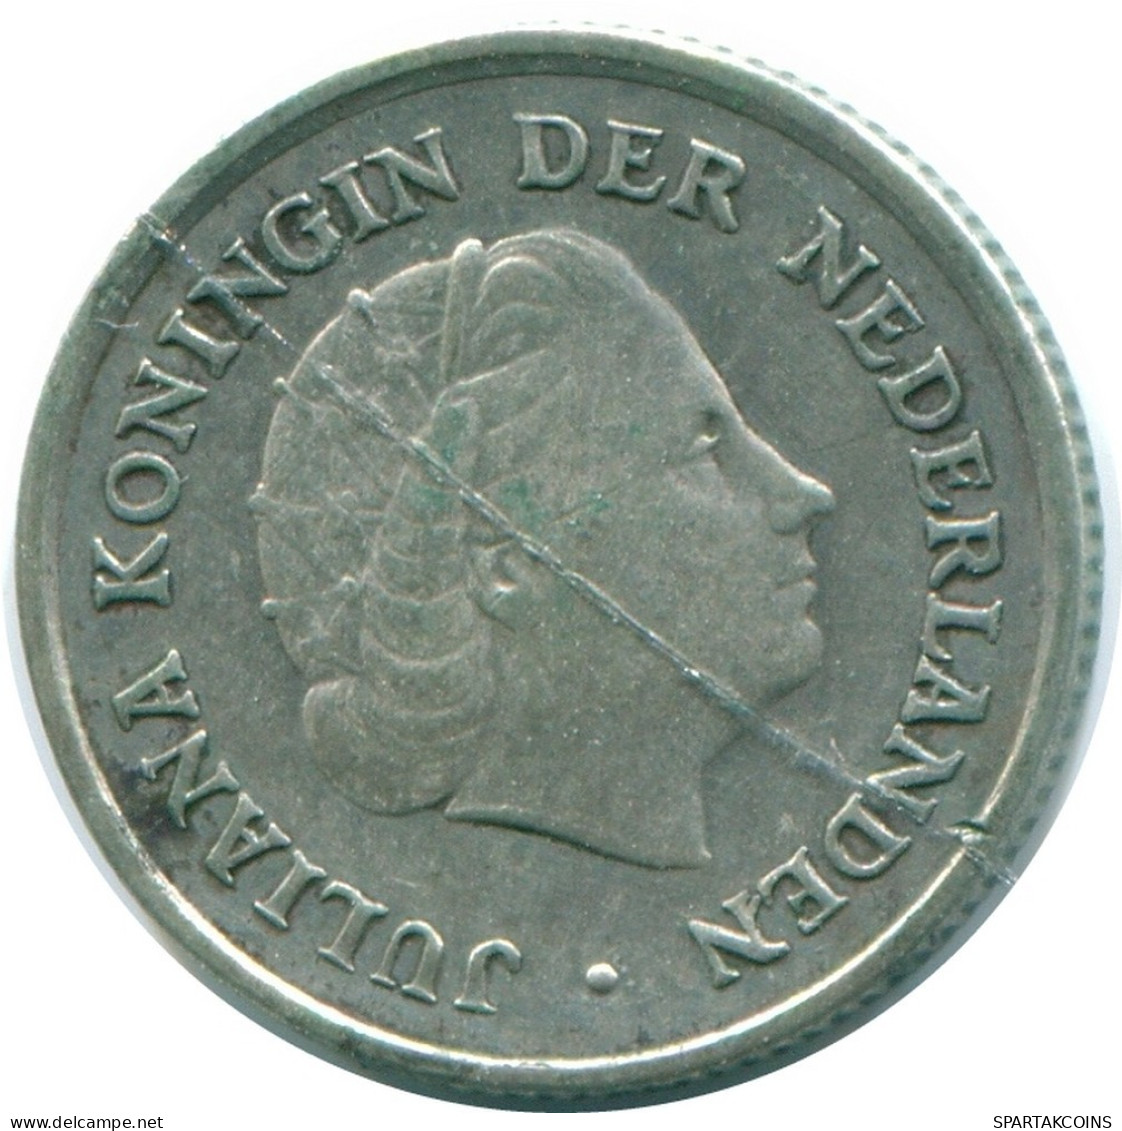 1/10 GULDEN 1960 NETHERLANDS ANTILLES SILVER Colonial Coin #NL12267.3.U.A - Netherlands Antilles